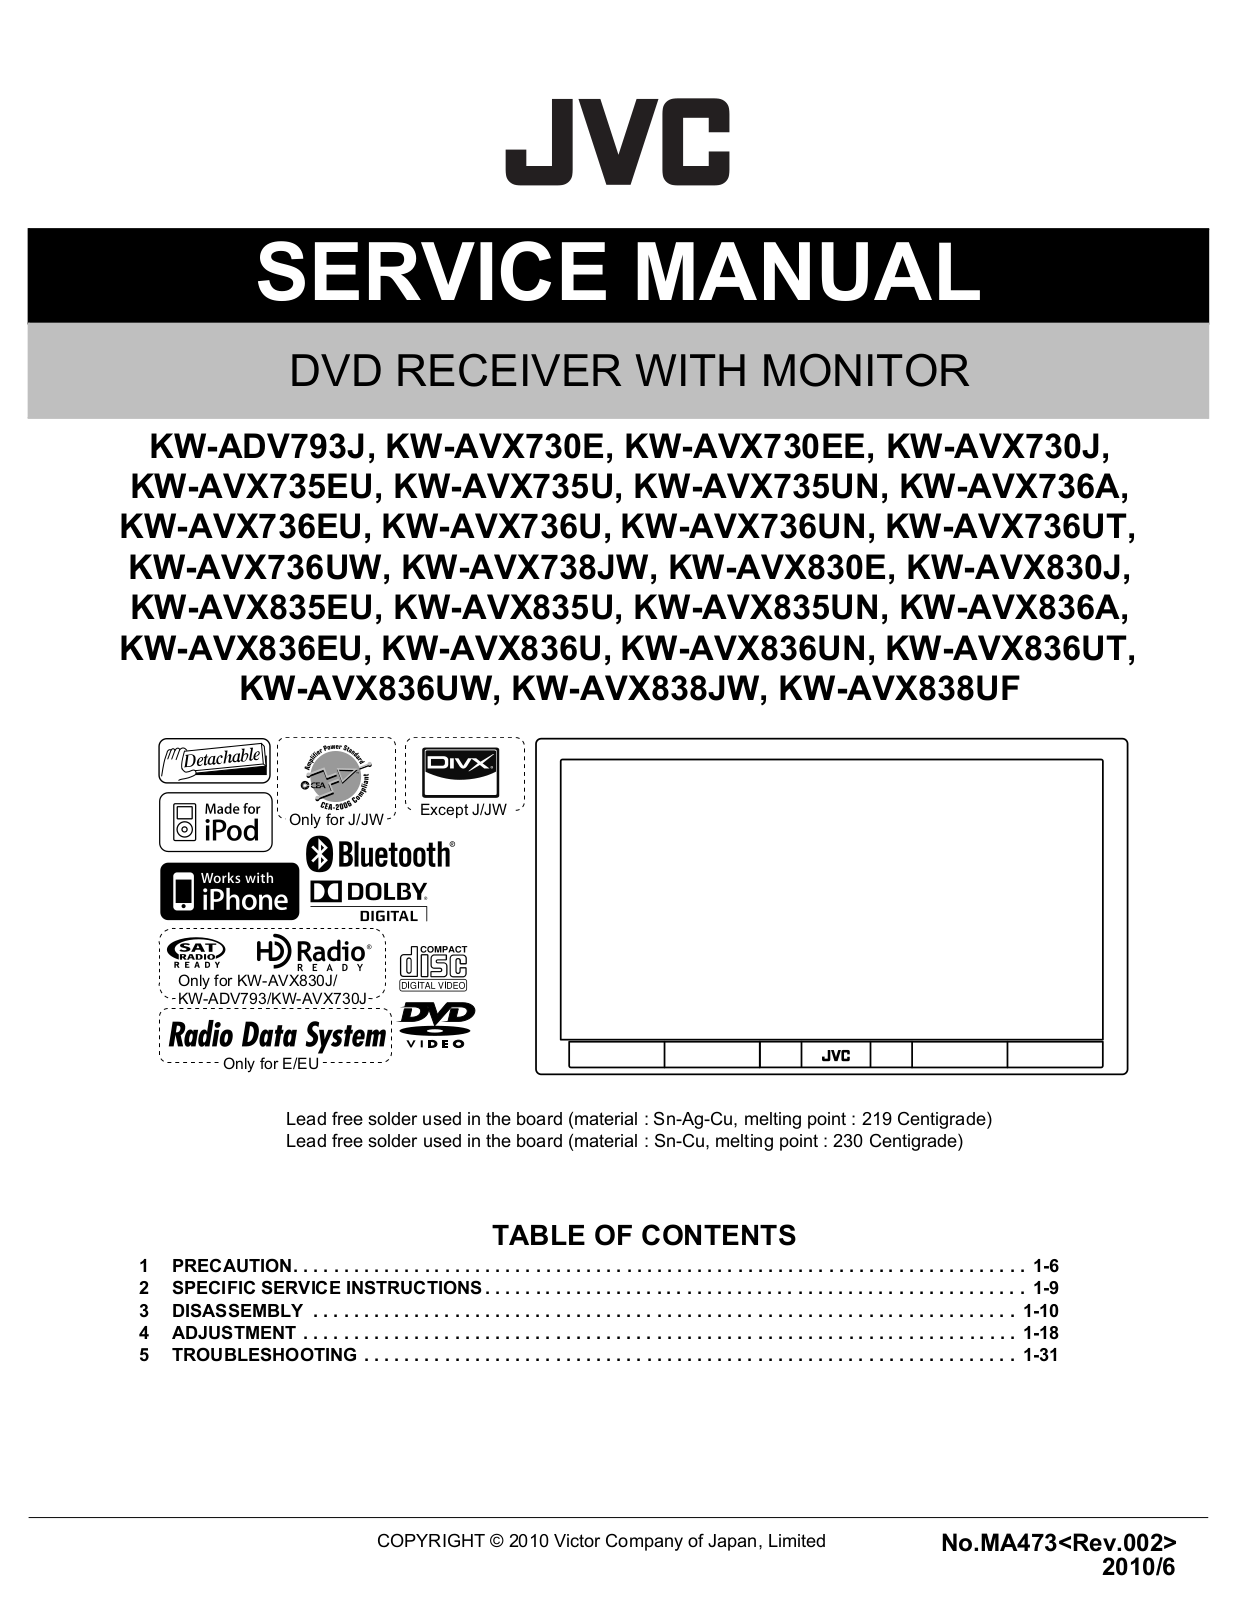 Jvc KW-AVX838-UF, KW-AVX838-JW, KW-AVX836-UN, KW-AVX836-U, KW-AVX836-EU Service Manual